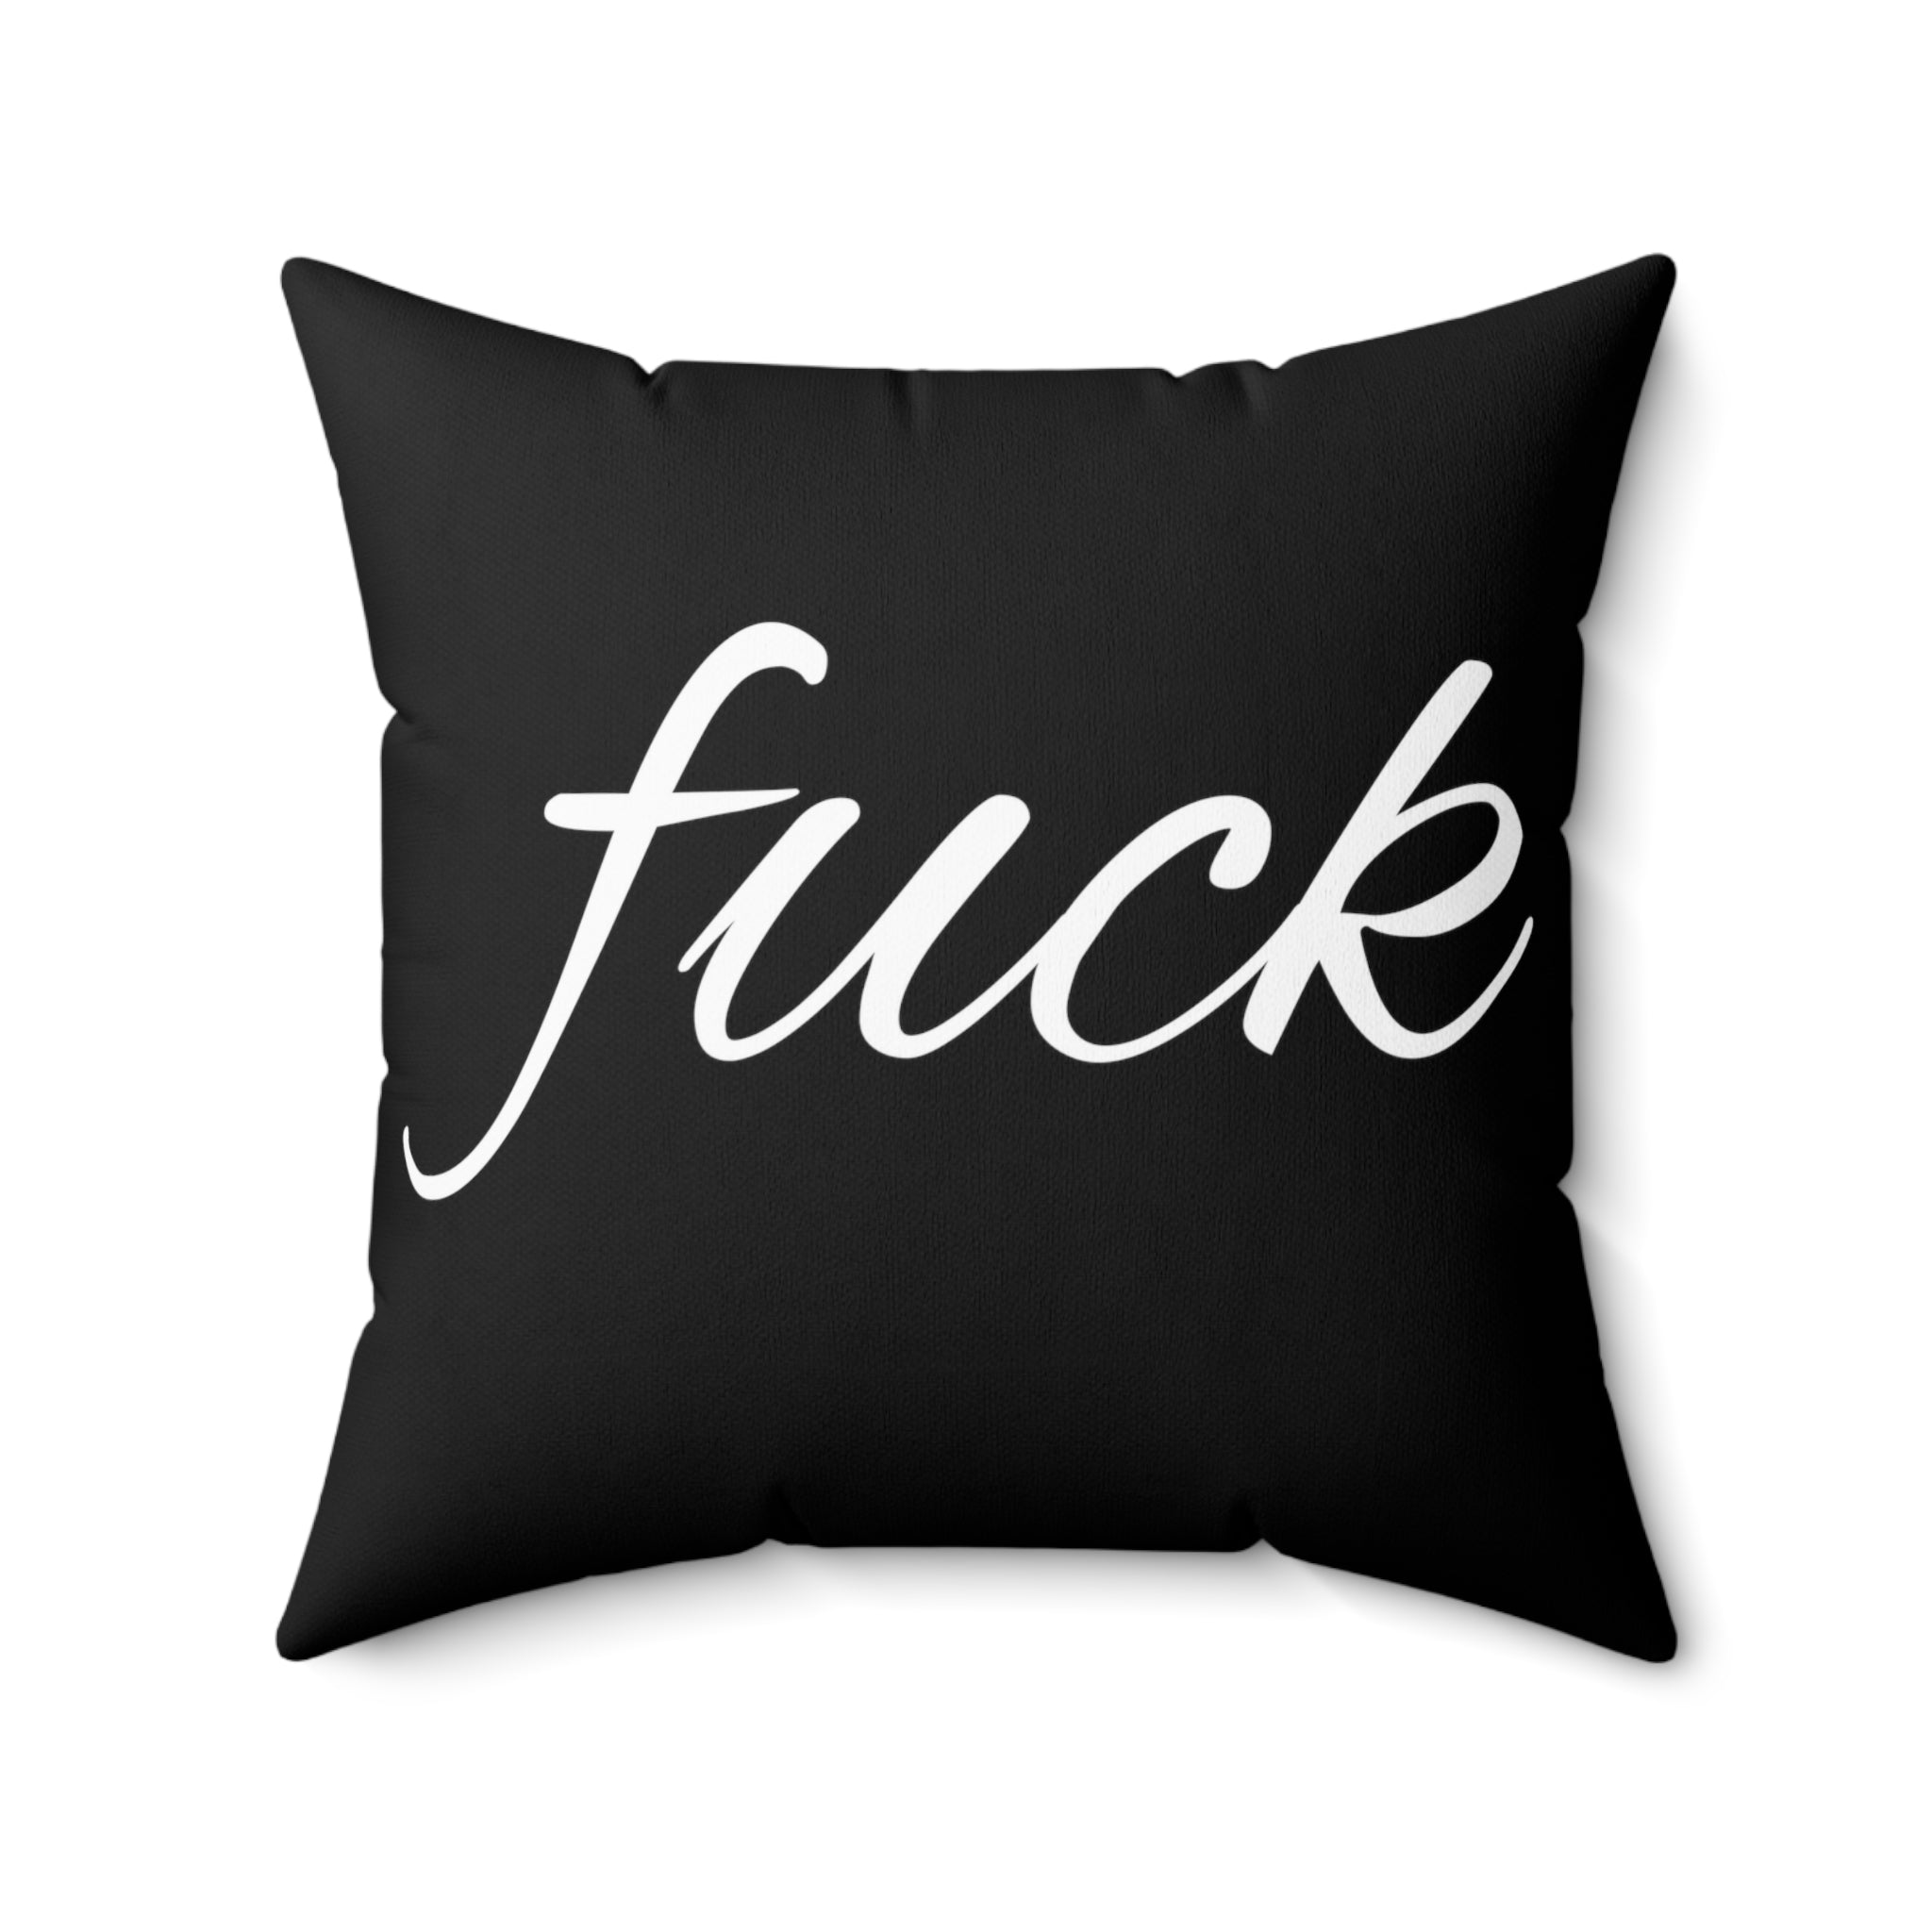  FUCK (Black) Spun Polyester Square Pillow, Graphic Pillow, Home Decor Home Decor